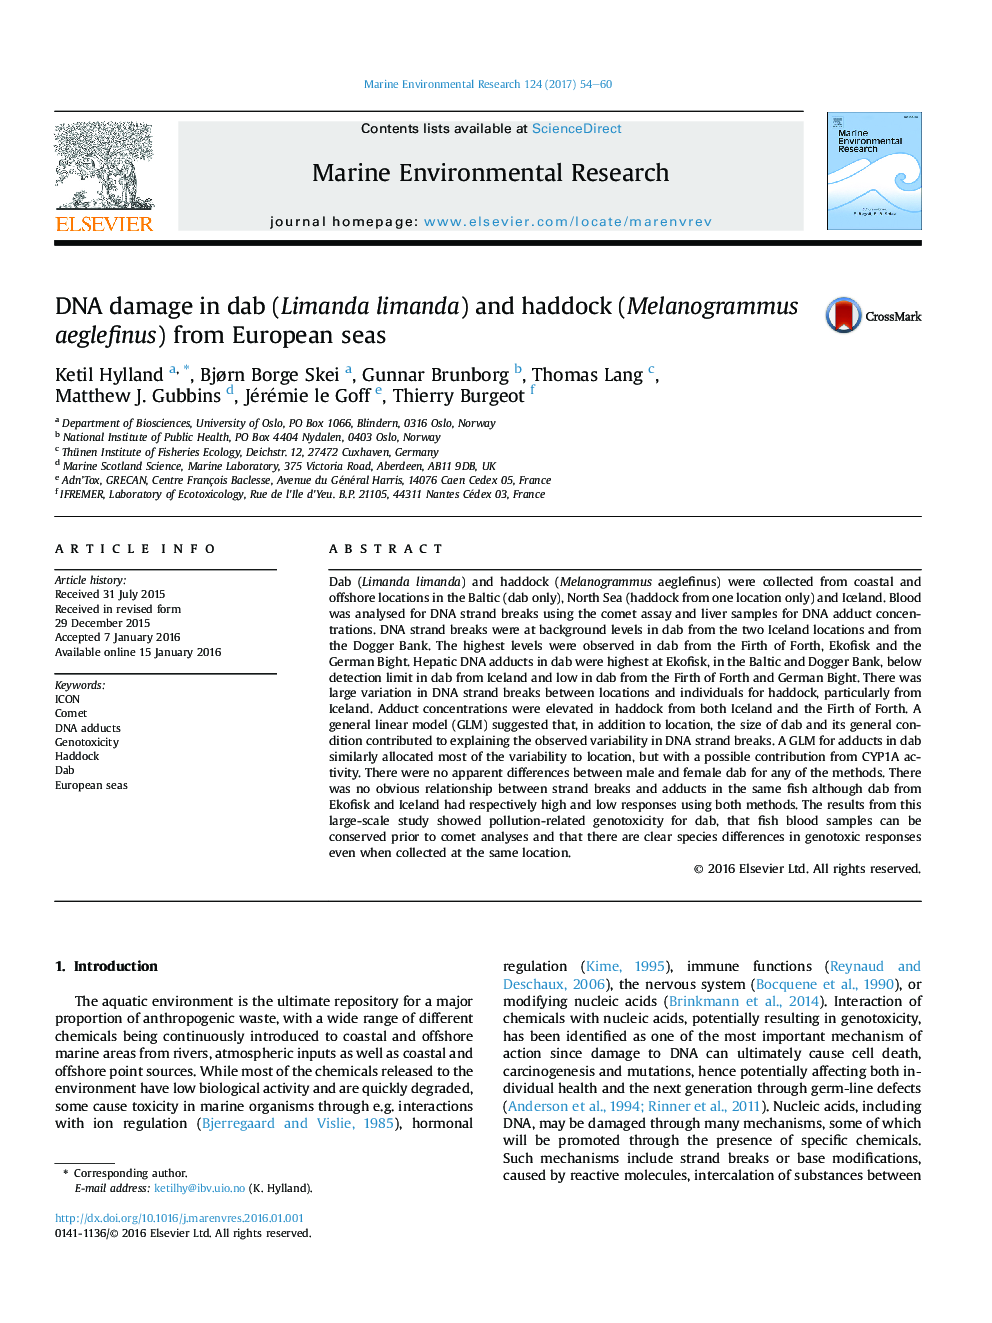 DNA damage in dab (Limanda limanda) and haddock (Melanogrammus aeglefinus) from European seas